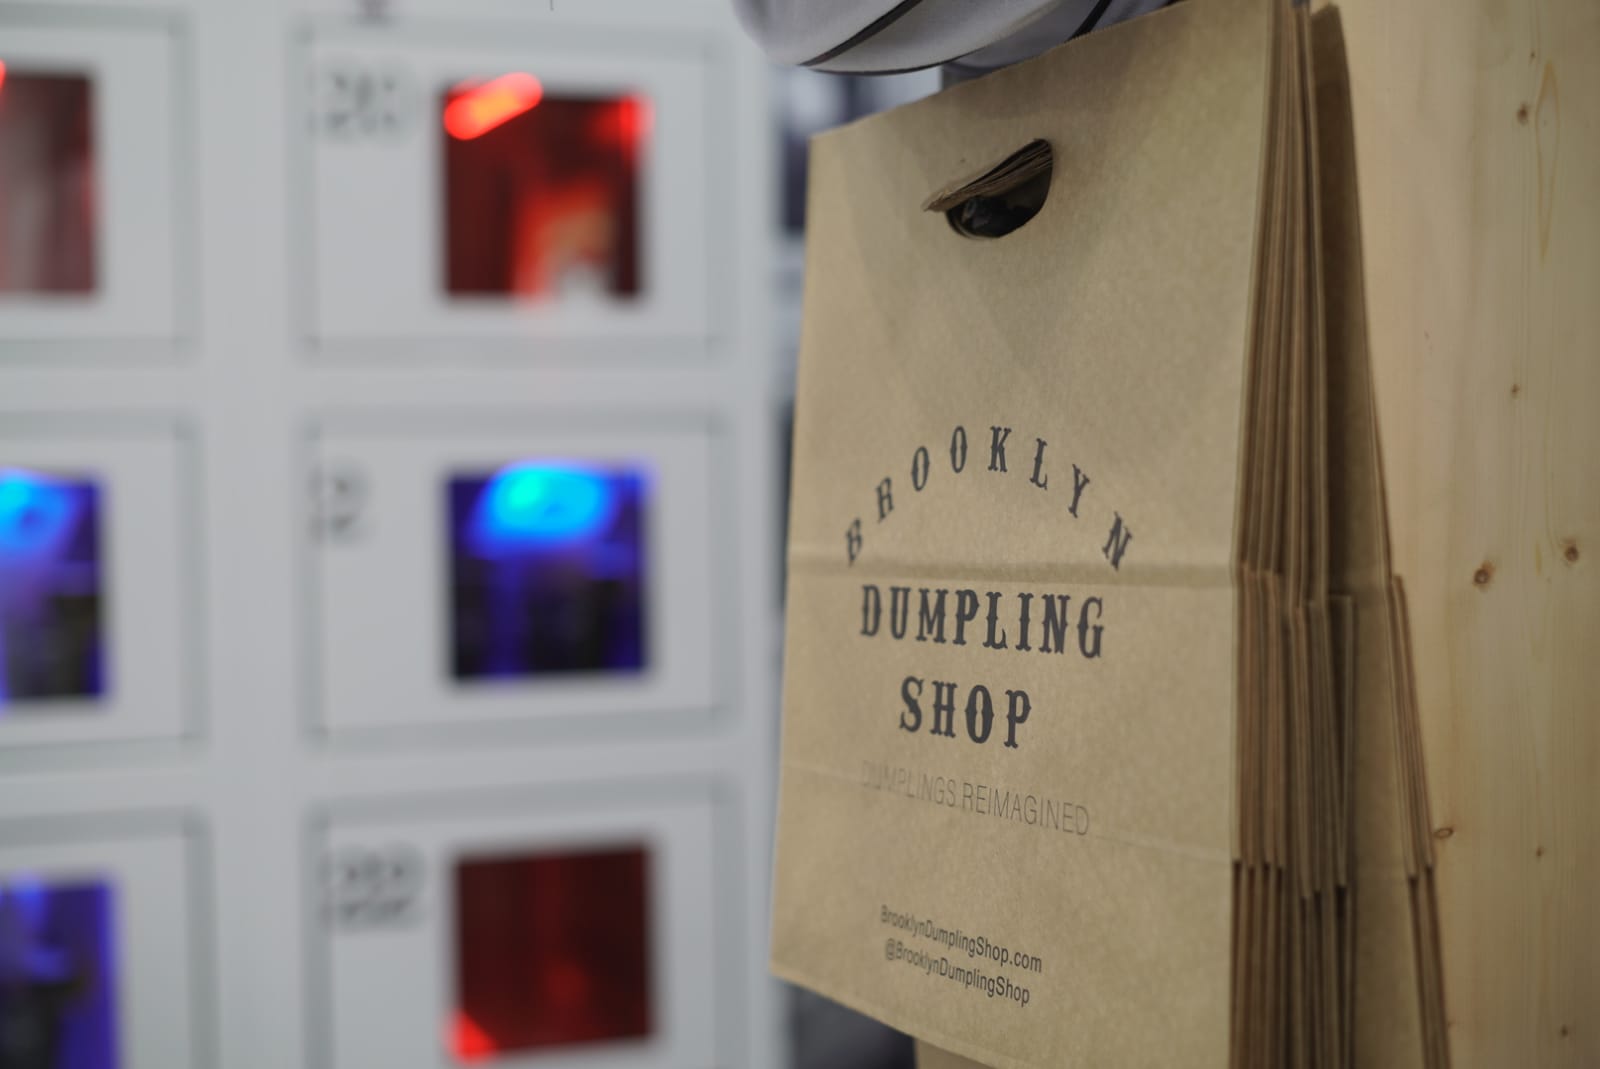 Brooklyn Dumpling Shop bag in front of automat in restaurant.